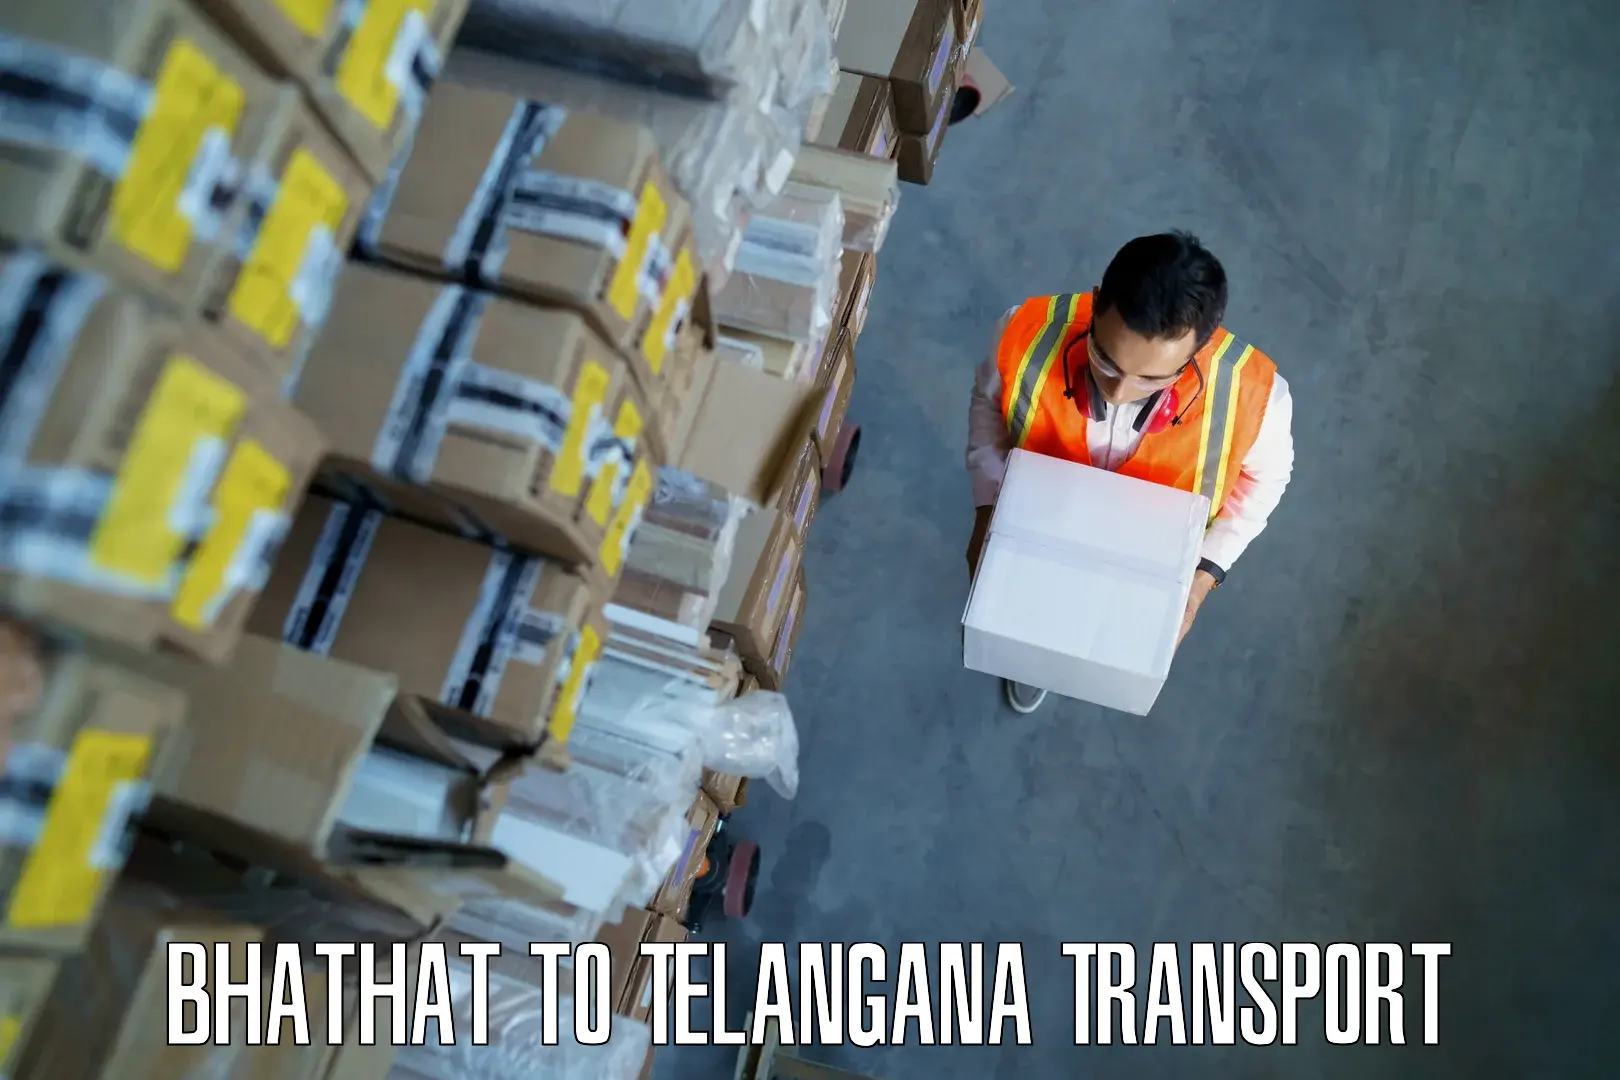 Intercity transport Bhathat to Telangana